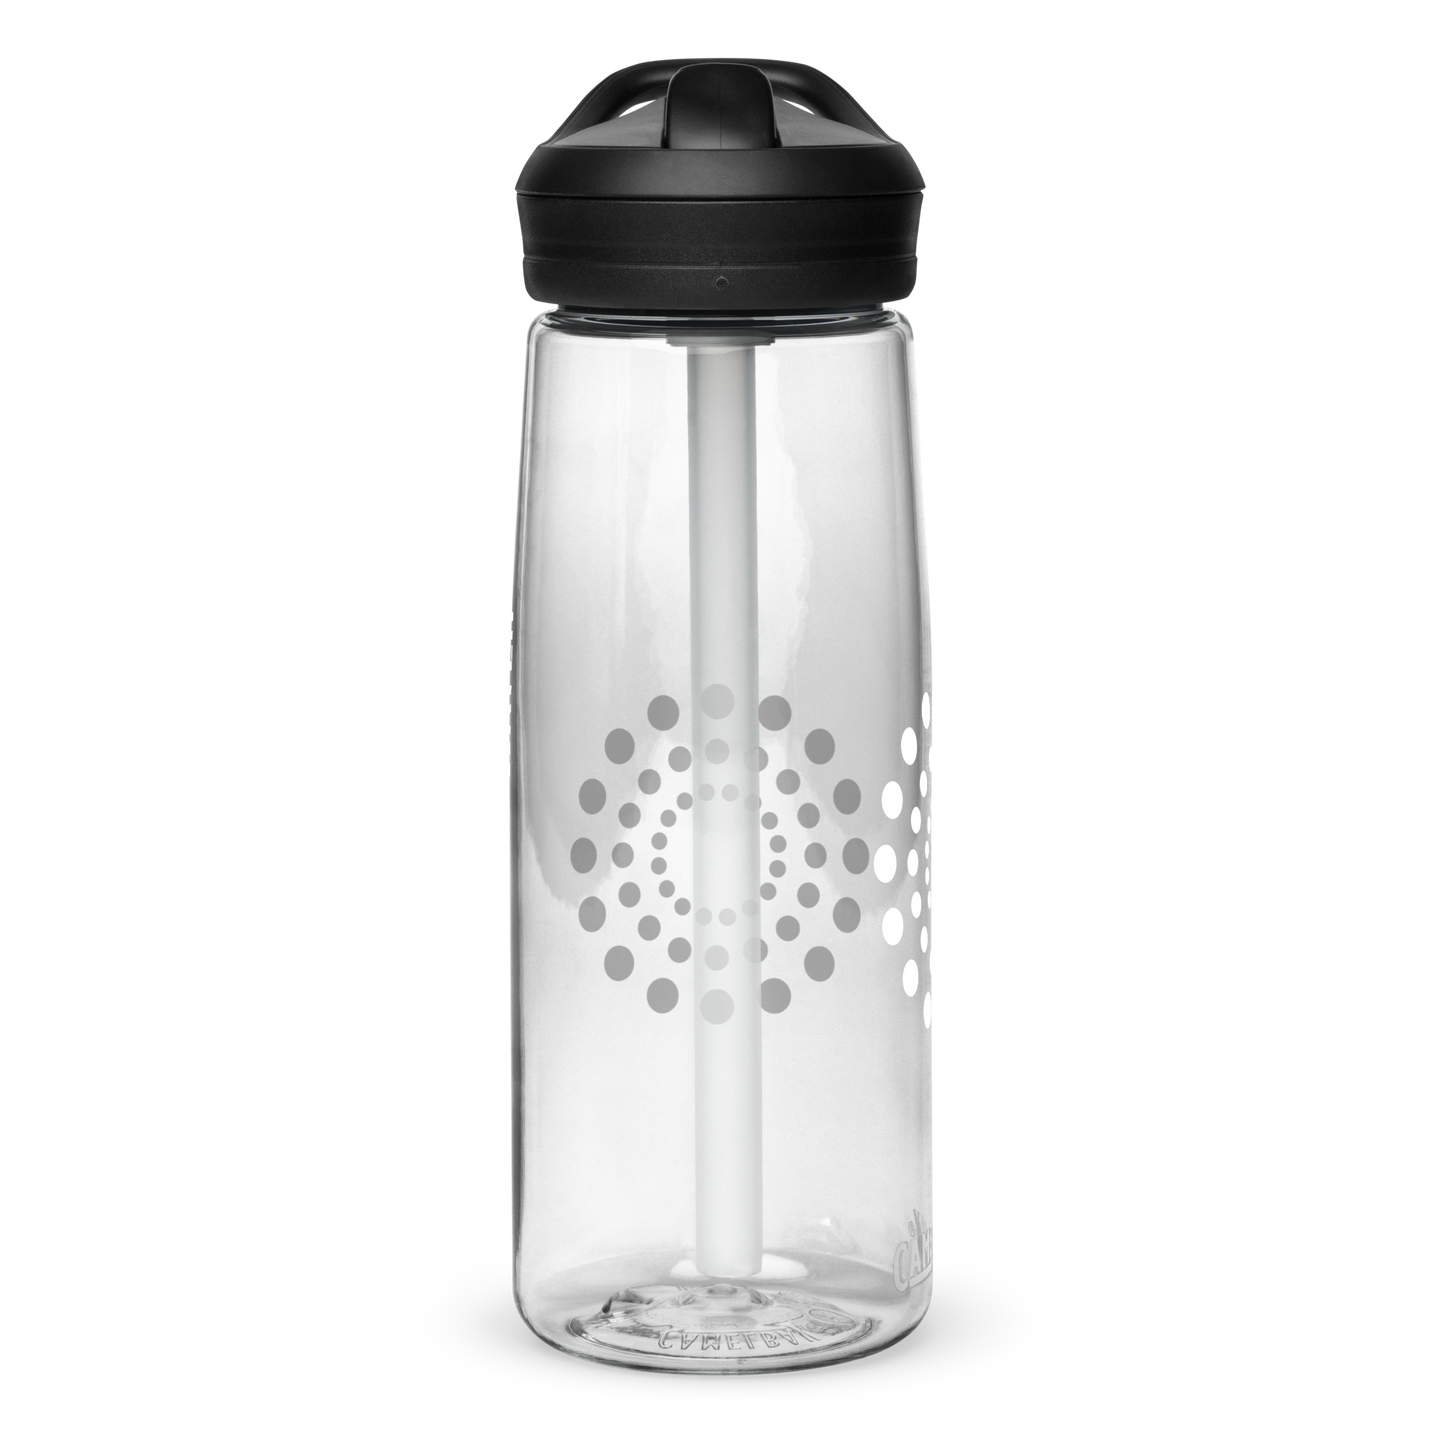 Reboot Rituals #4 - Sports water bottle